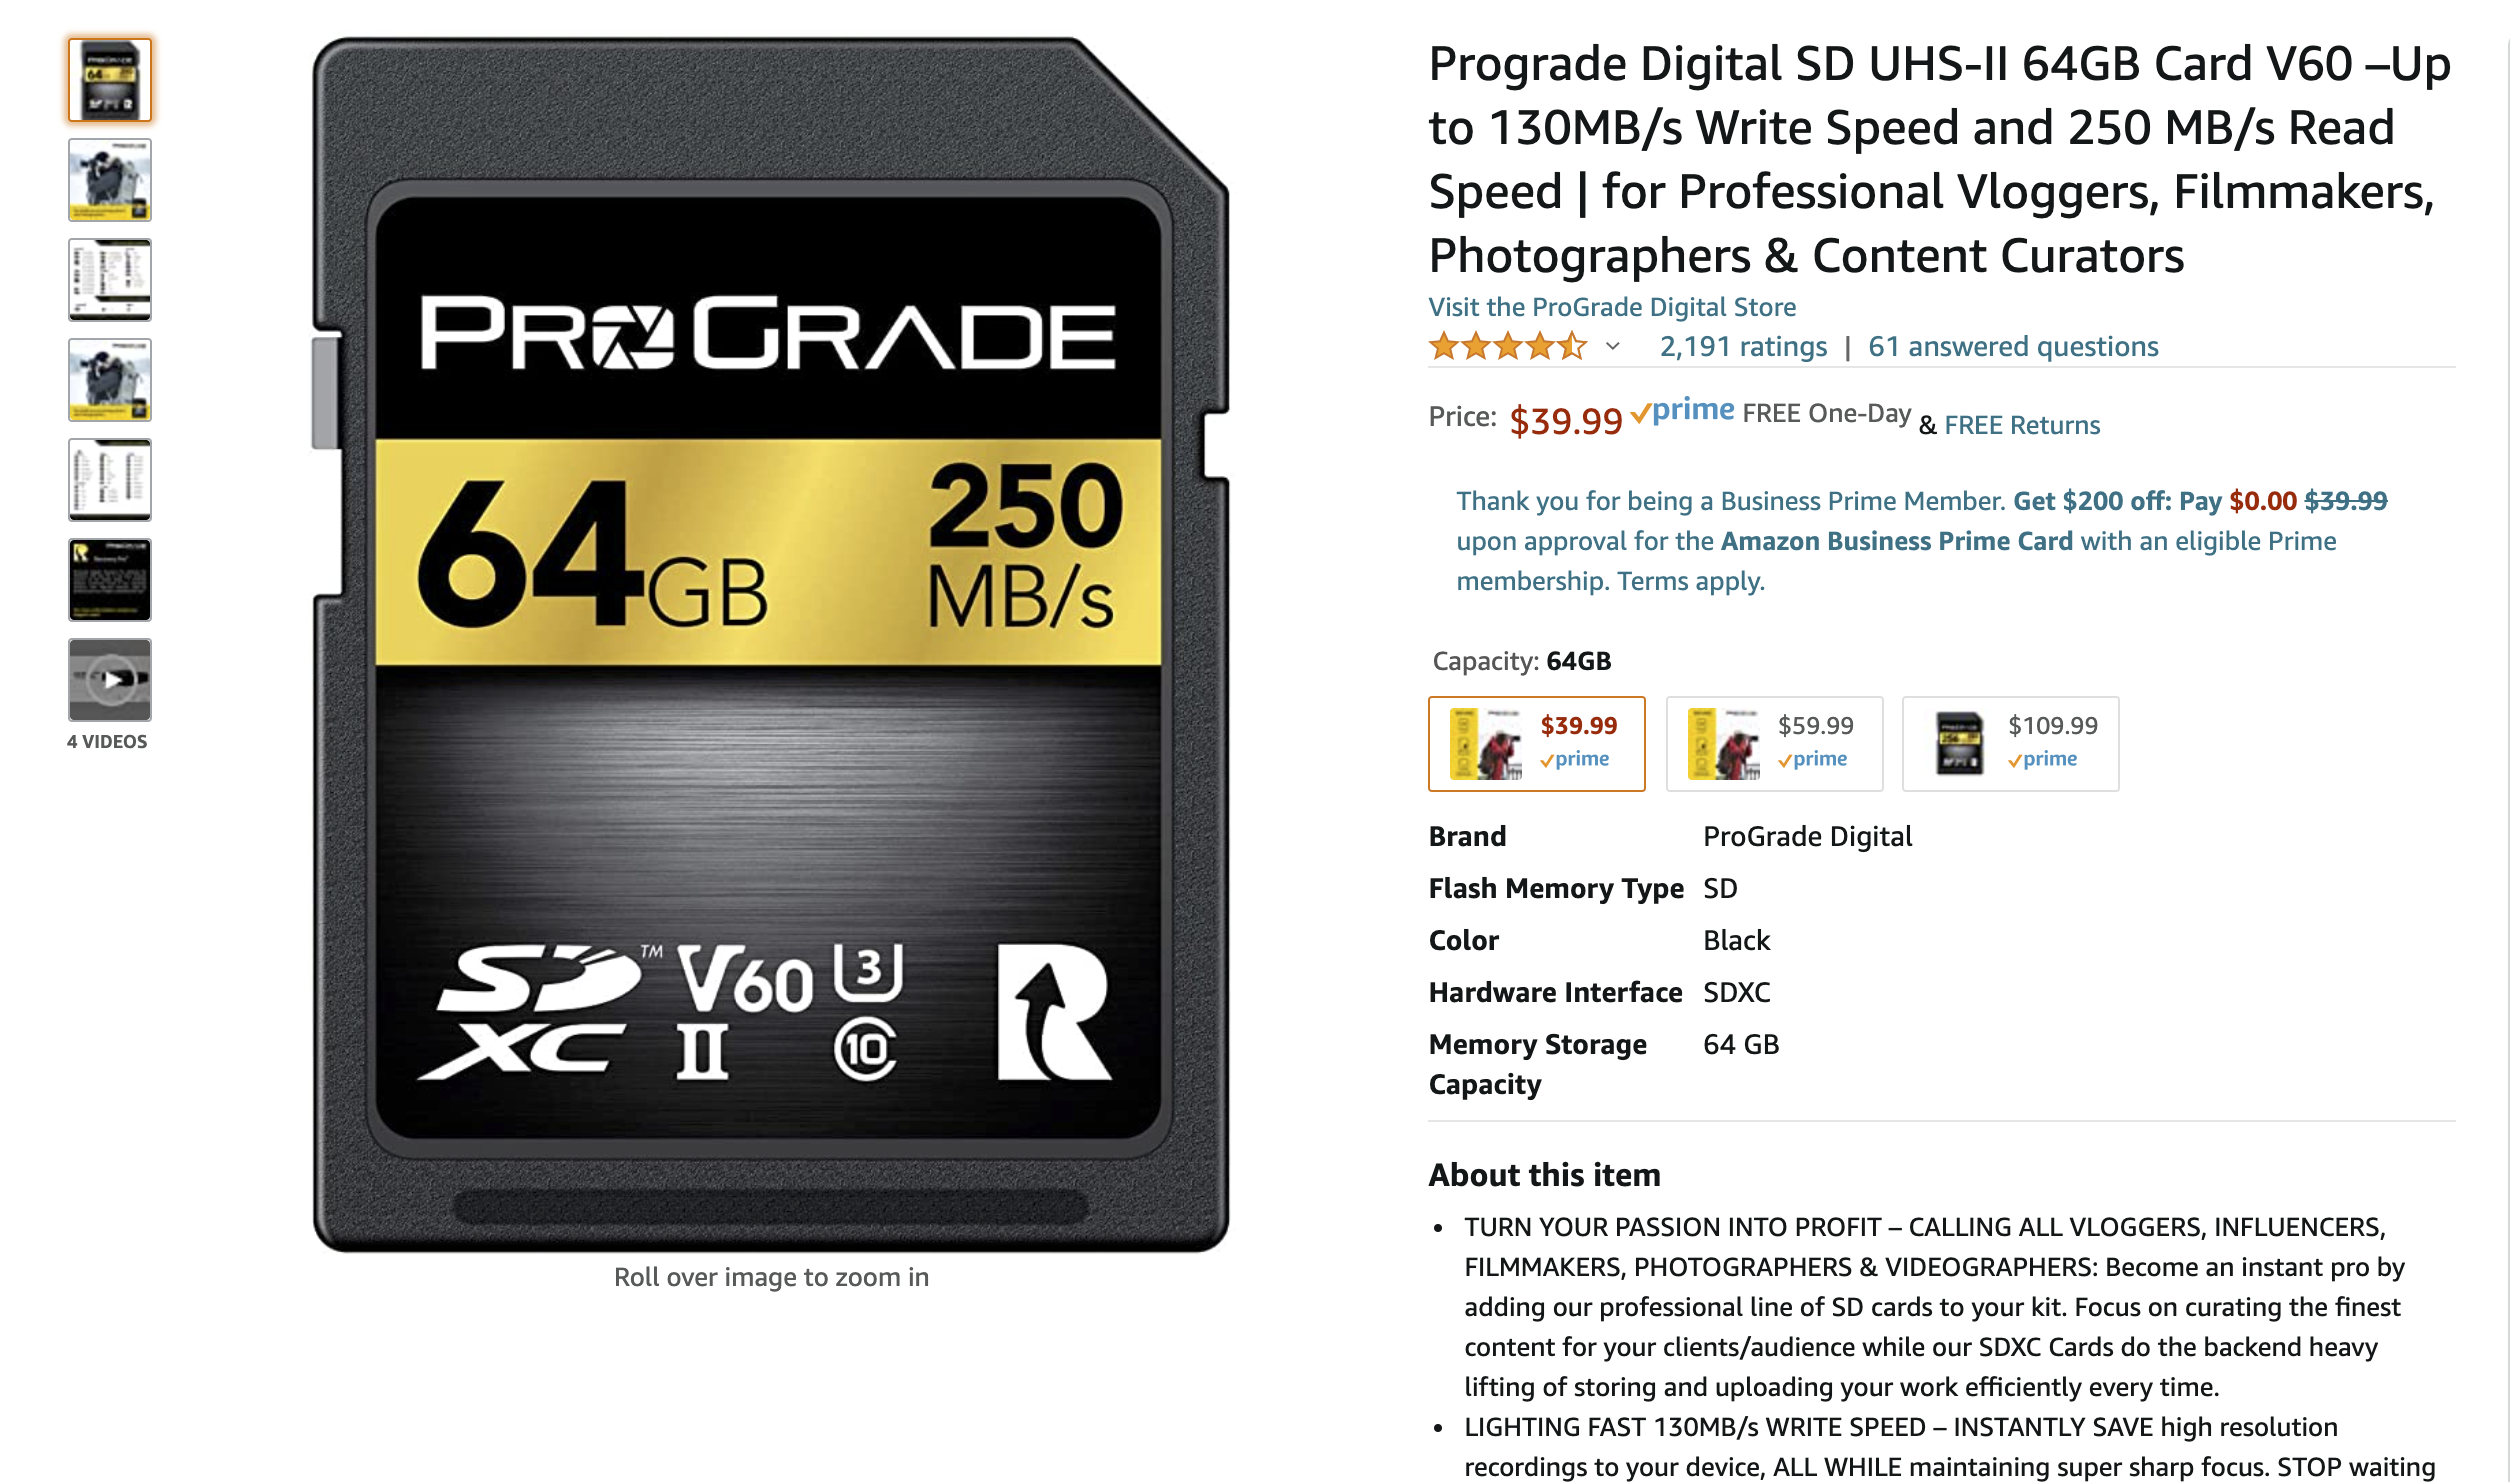 Prograde Digital SD UHS-II 64GB Card V60 listing